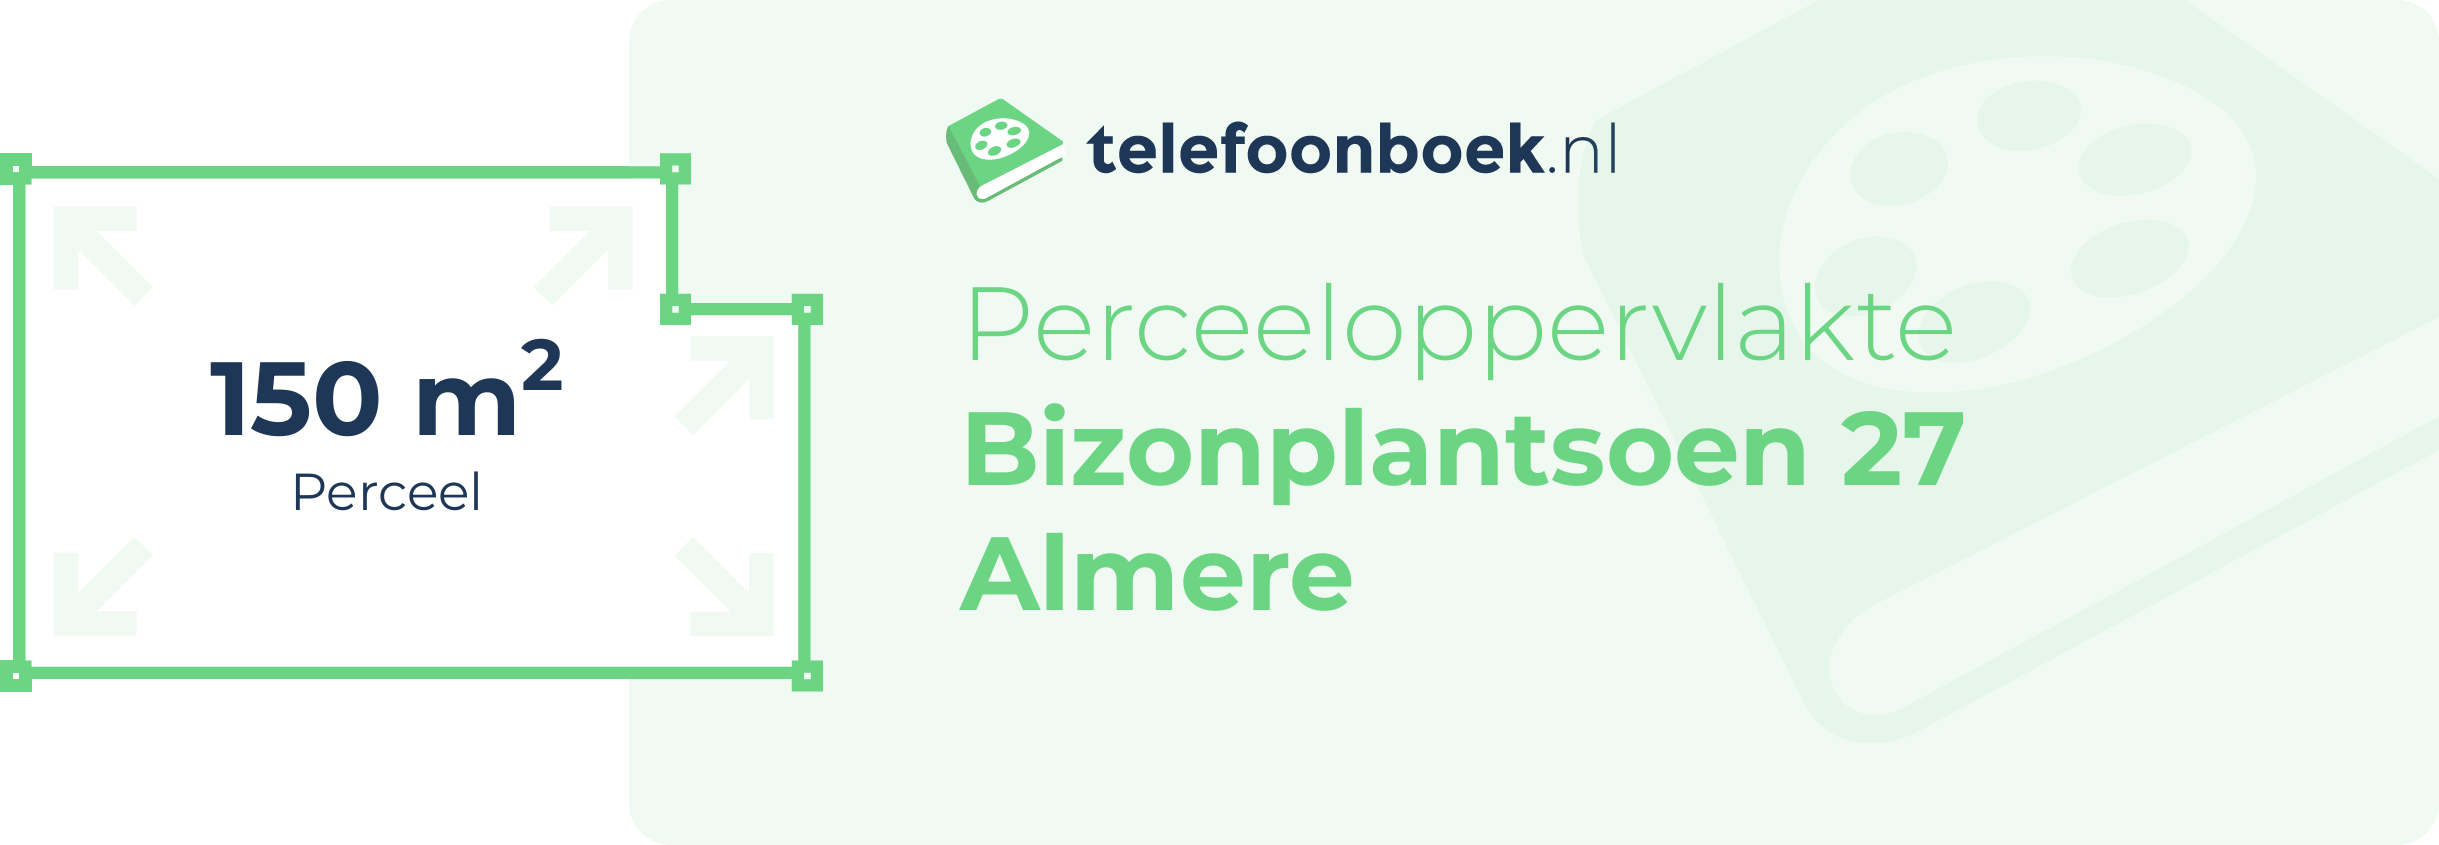 Perceeloppervlakte Bizonplantsoen 27 Almere